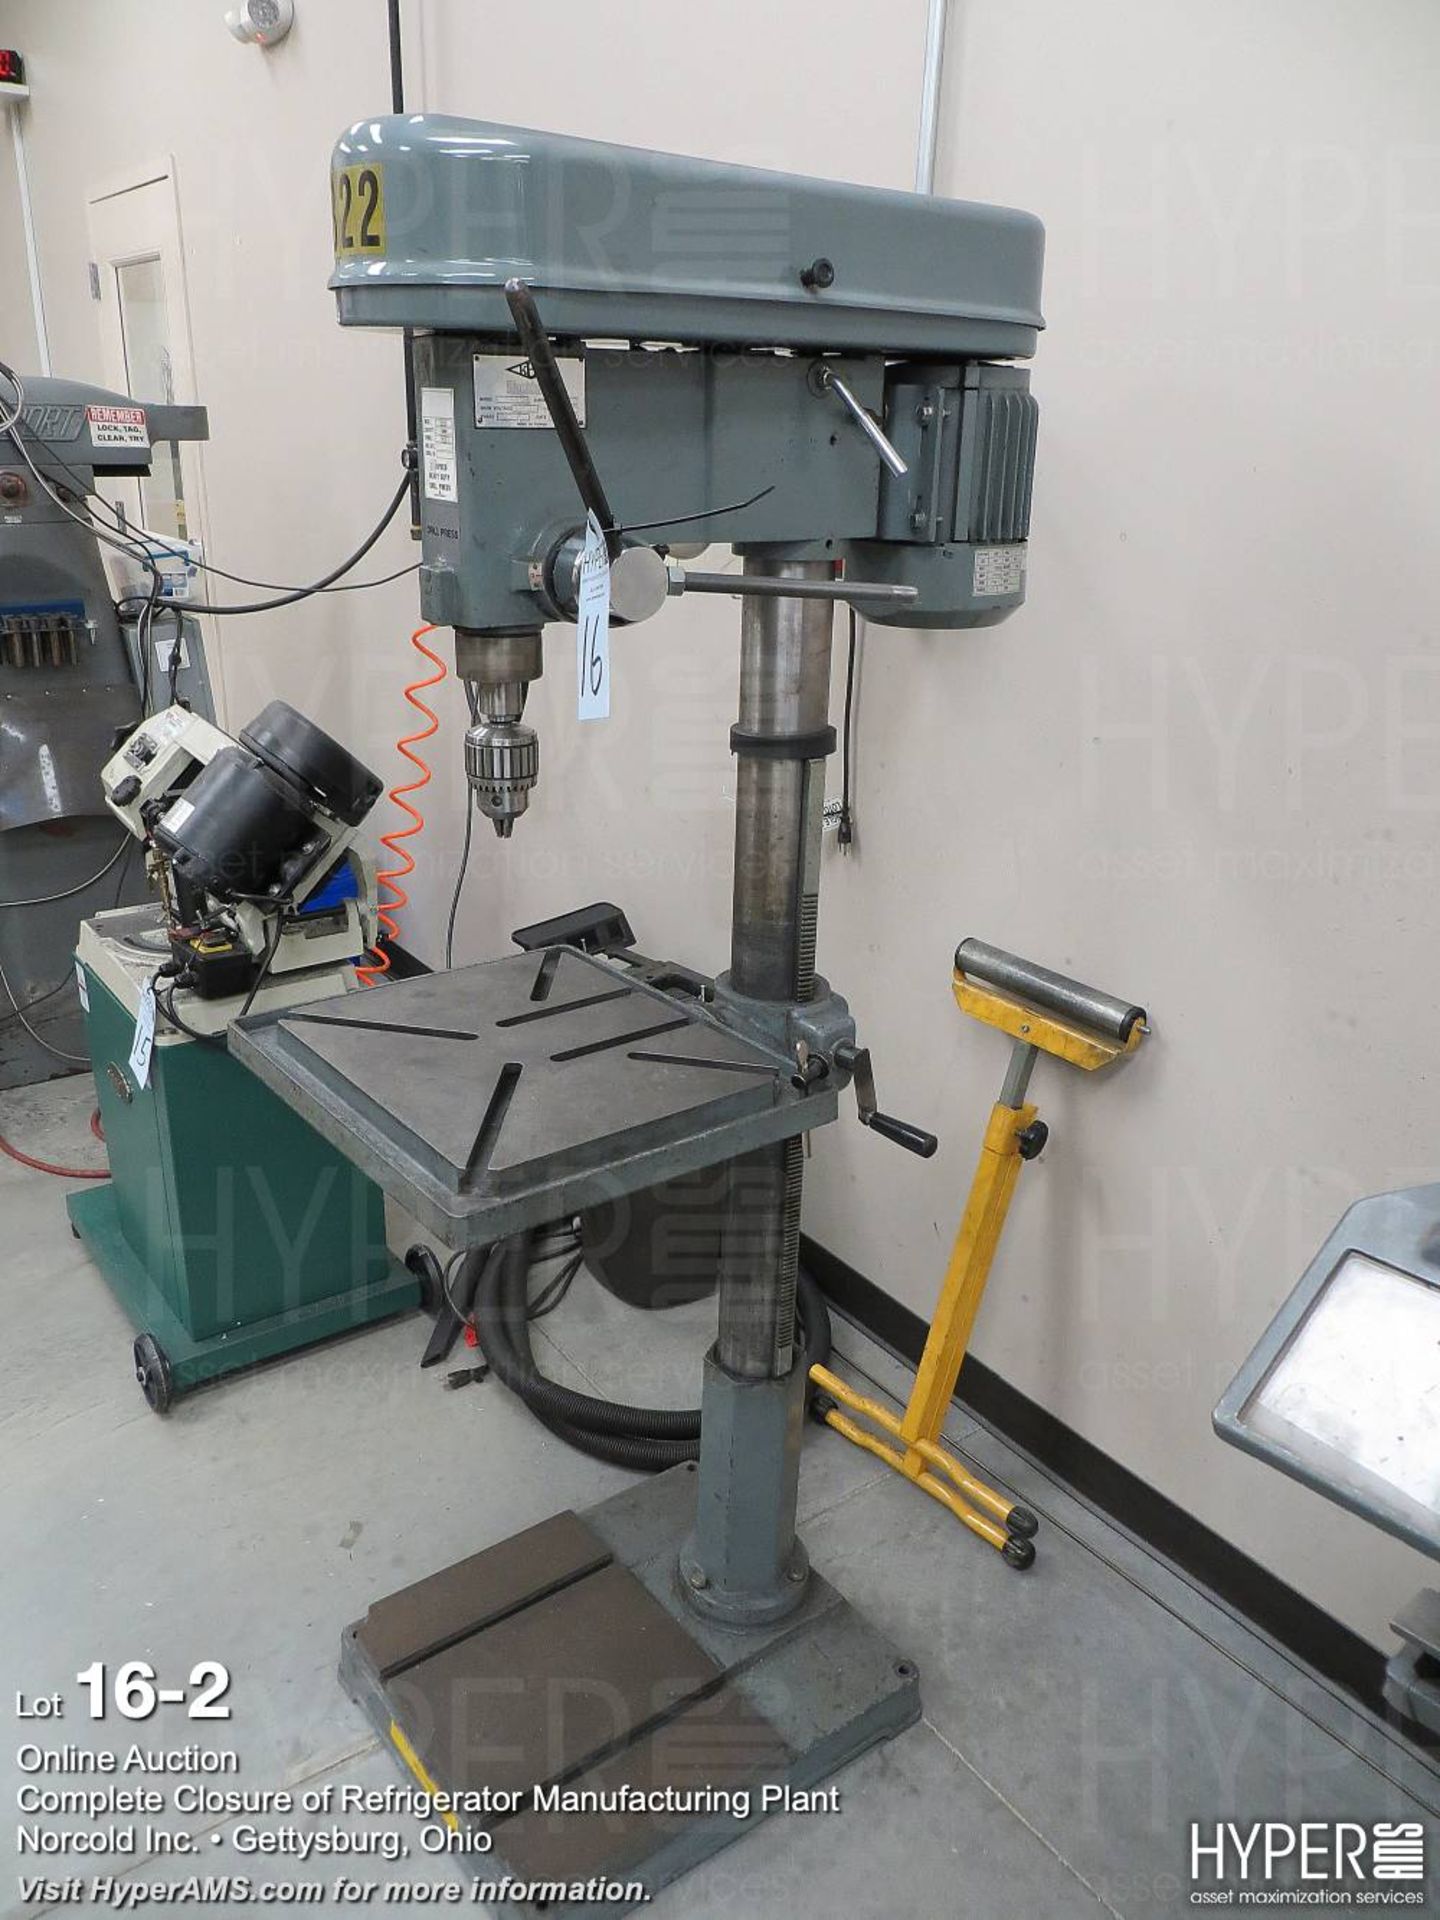 KBC machinery 12 speed heavy duty drill press - Image 3 of 4